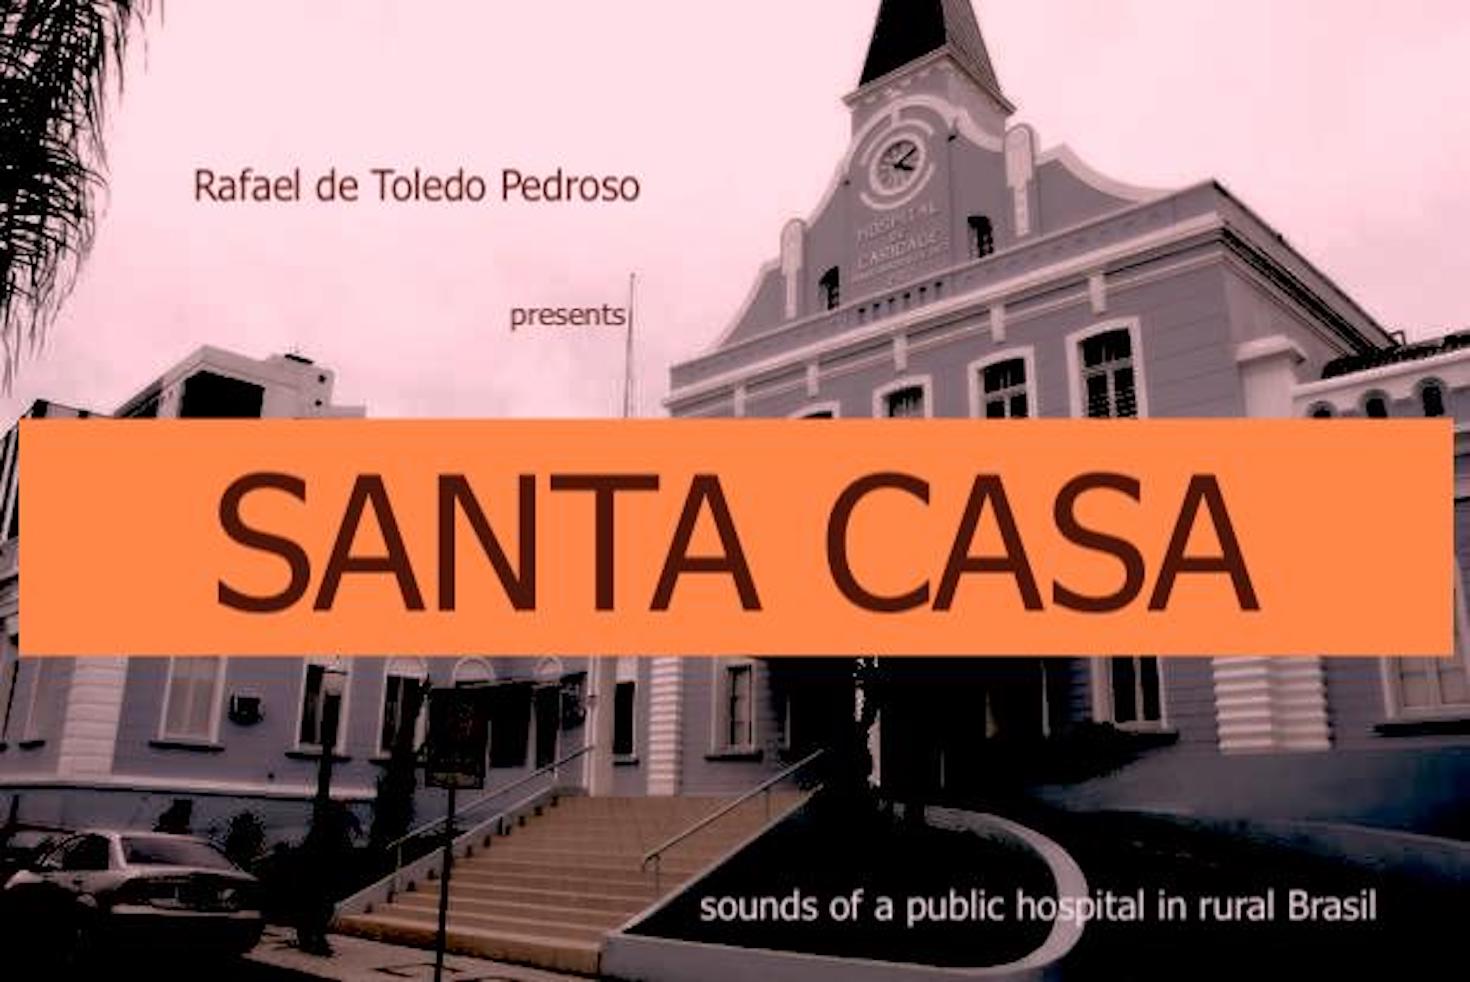 Rafael de Toledo Pedroso presents his field recording Santa Casa – sounds of a public hospital in rural Brasil